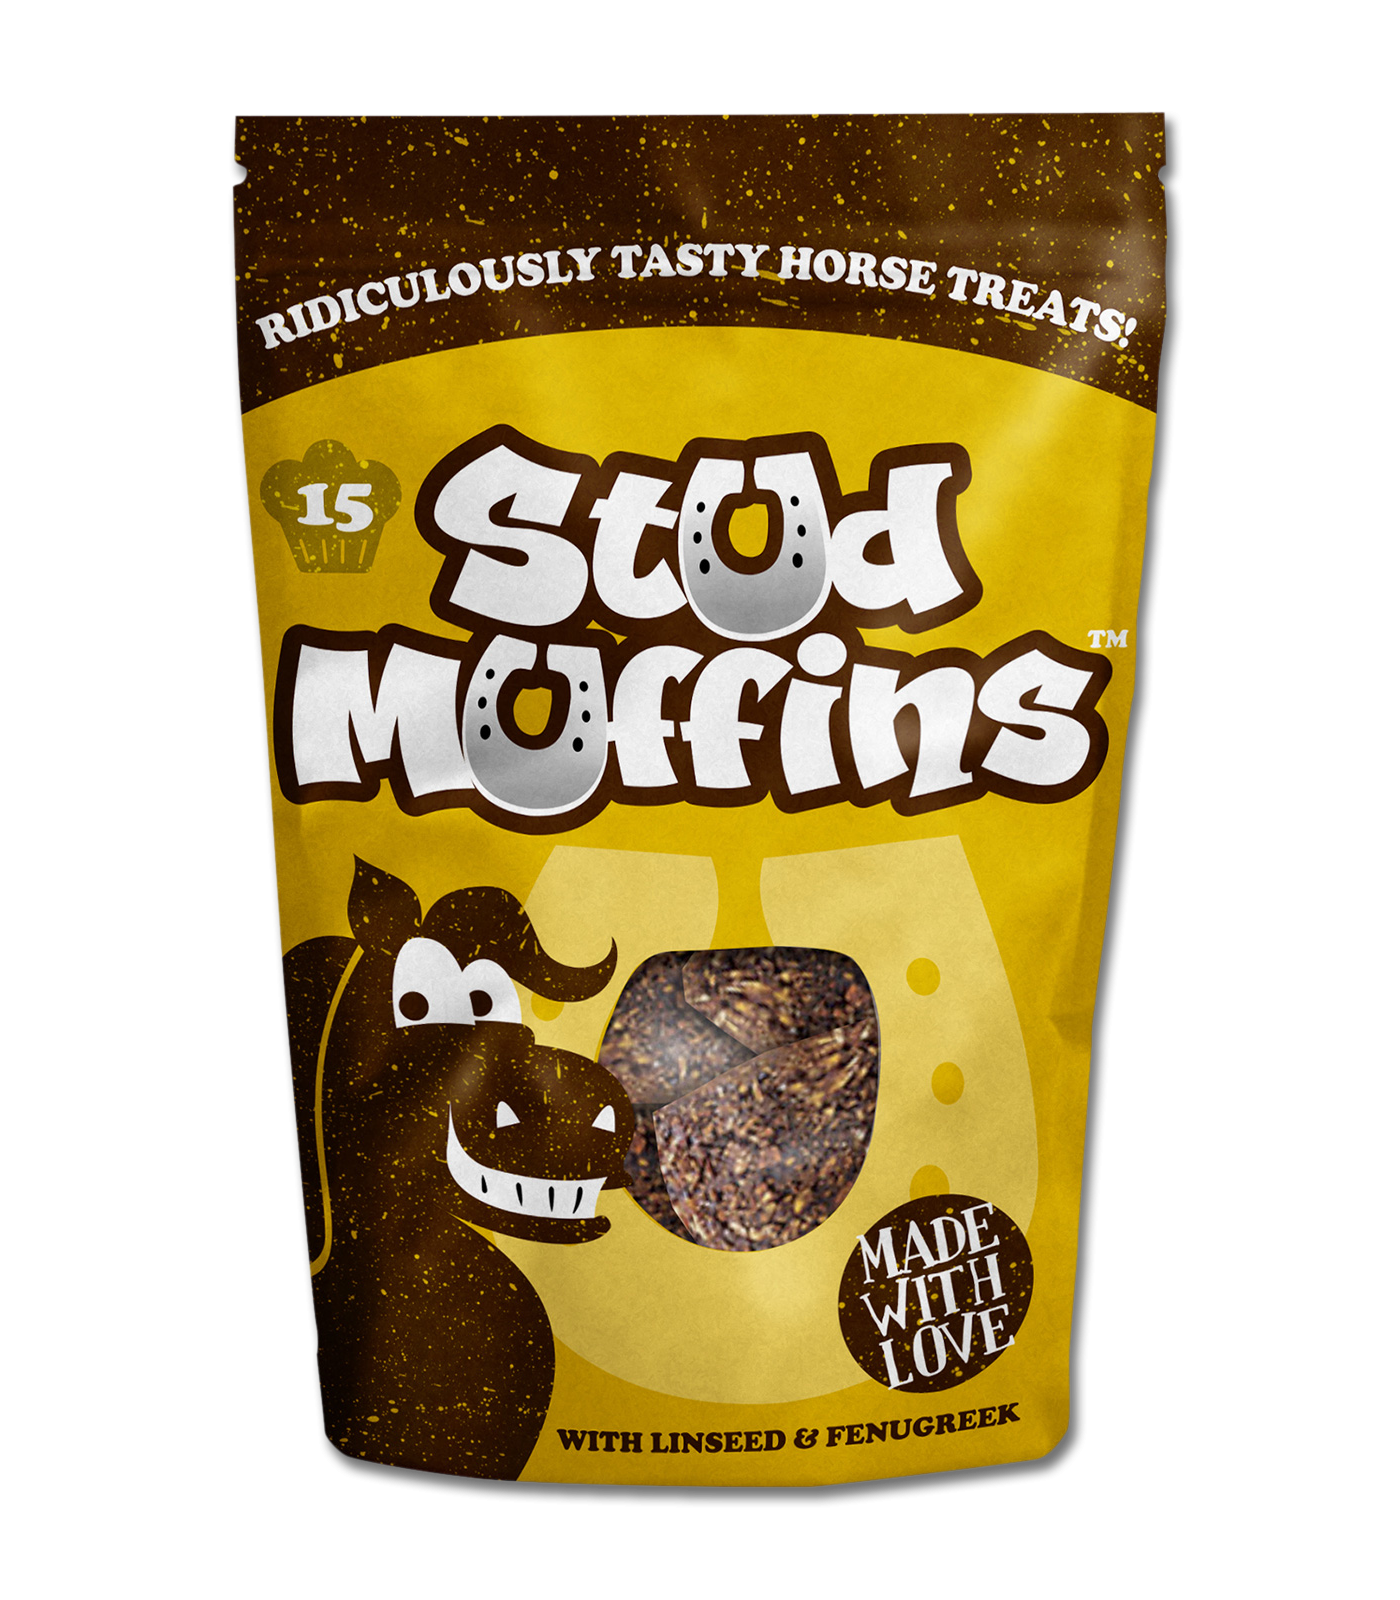 Stud muffin horse treats